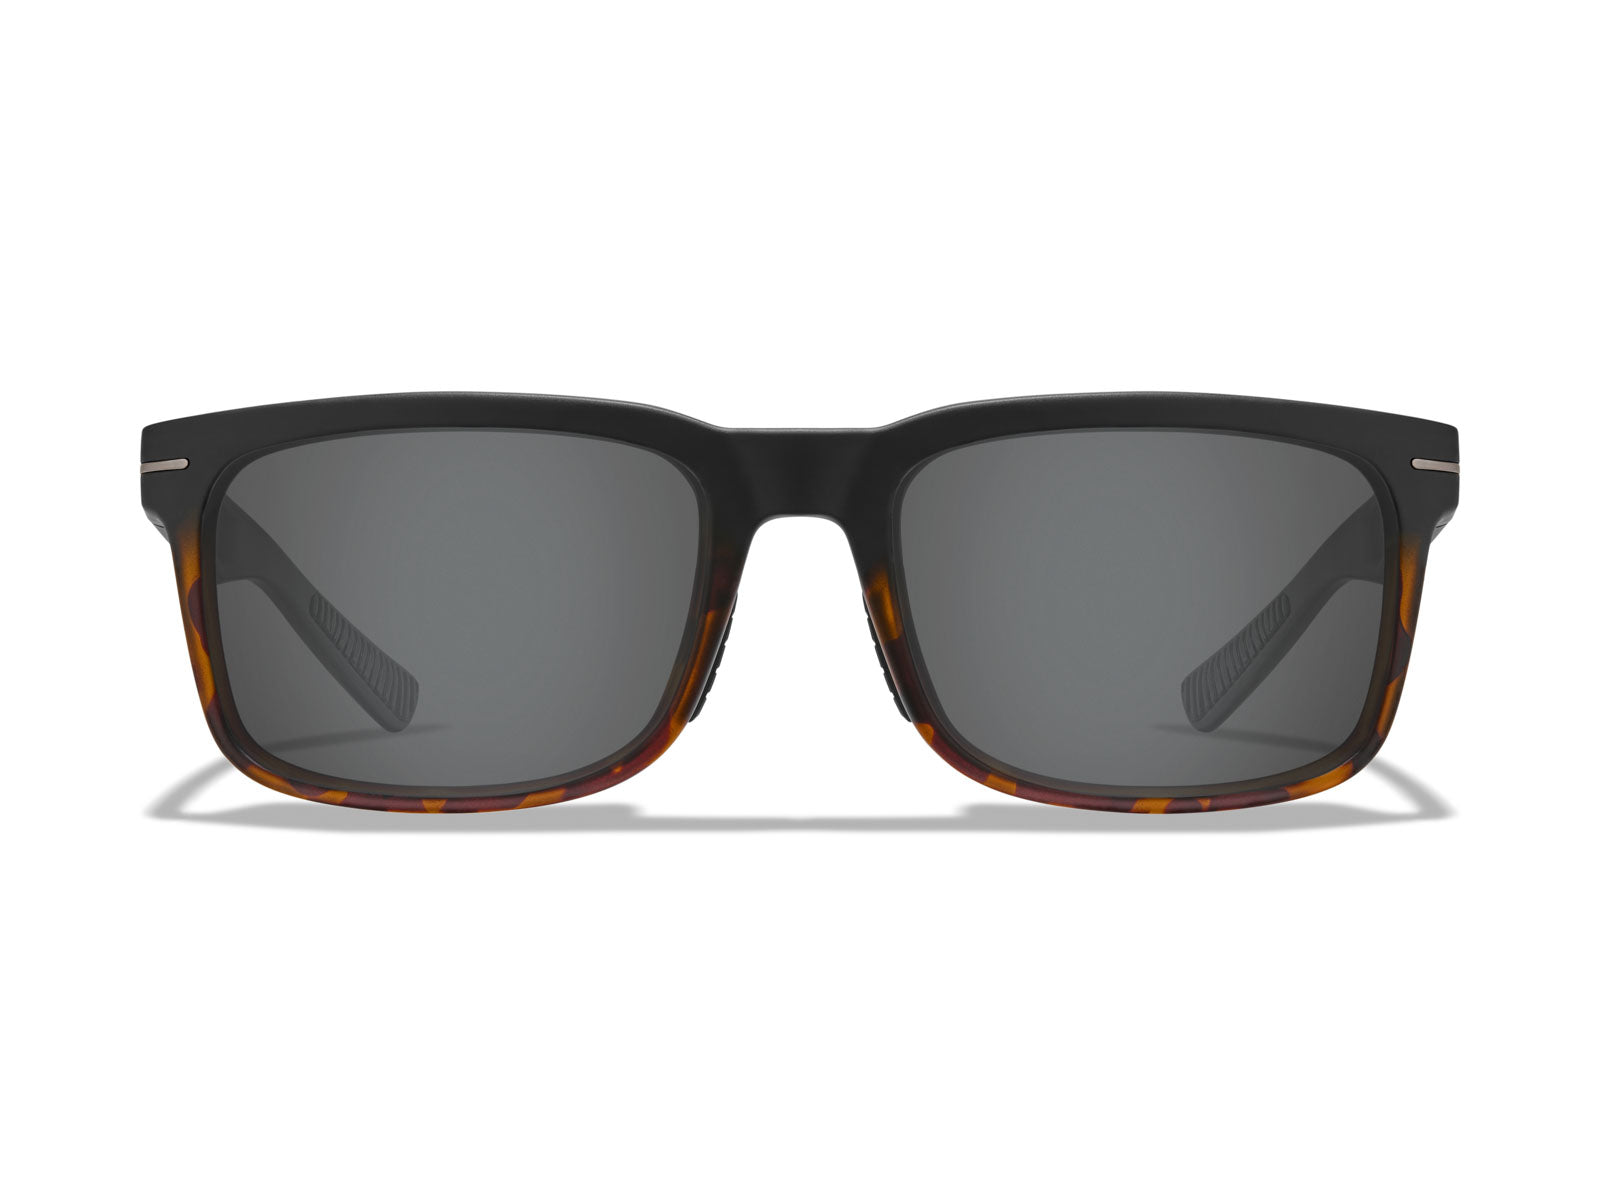 Roka Kona Sunglasses with Matte Black Frames - Dark Carbon (Polarized) Lens